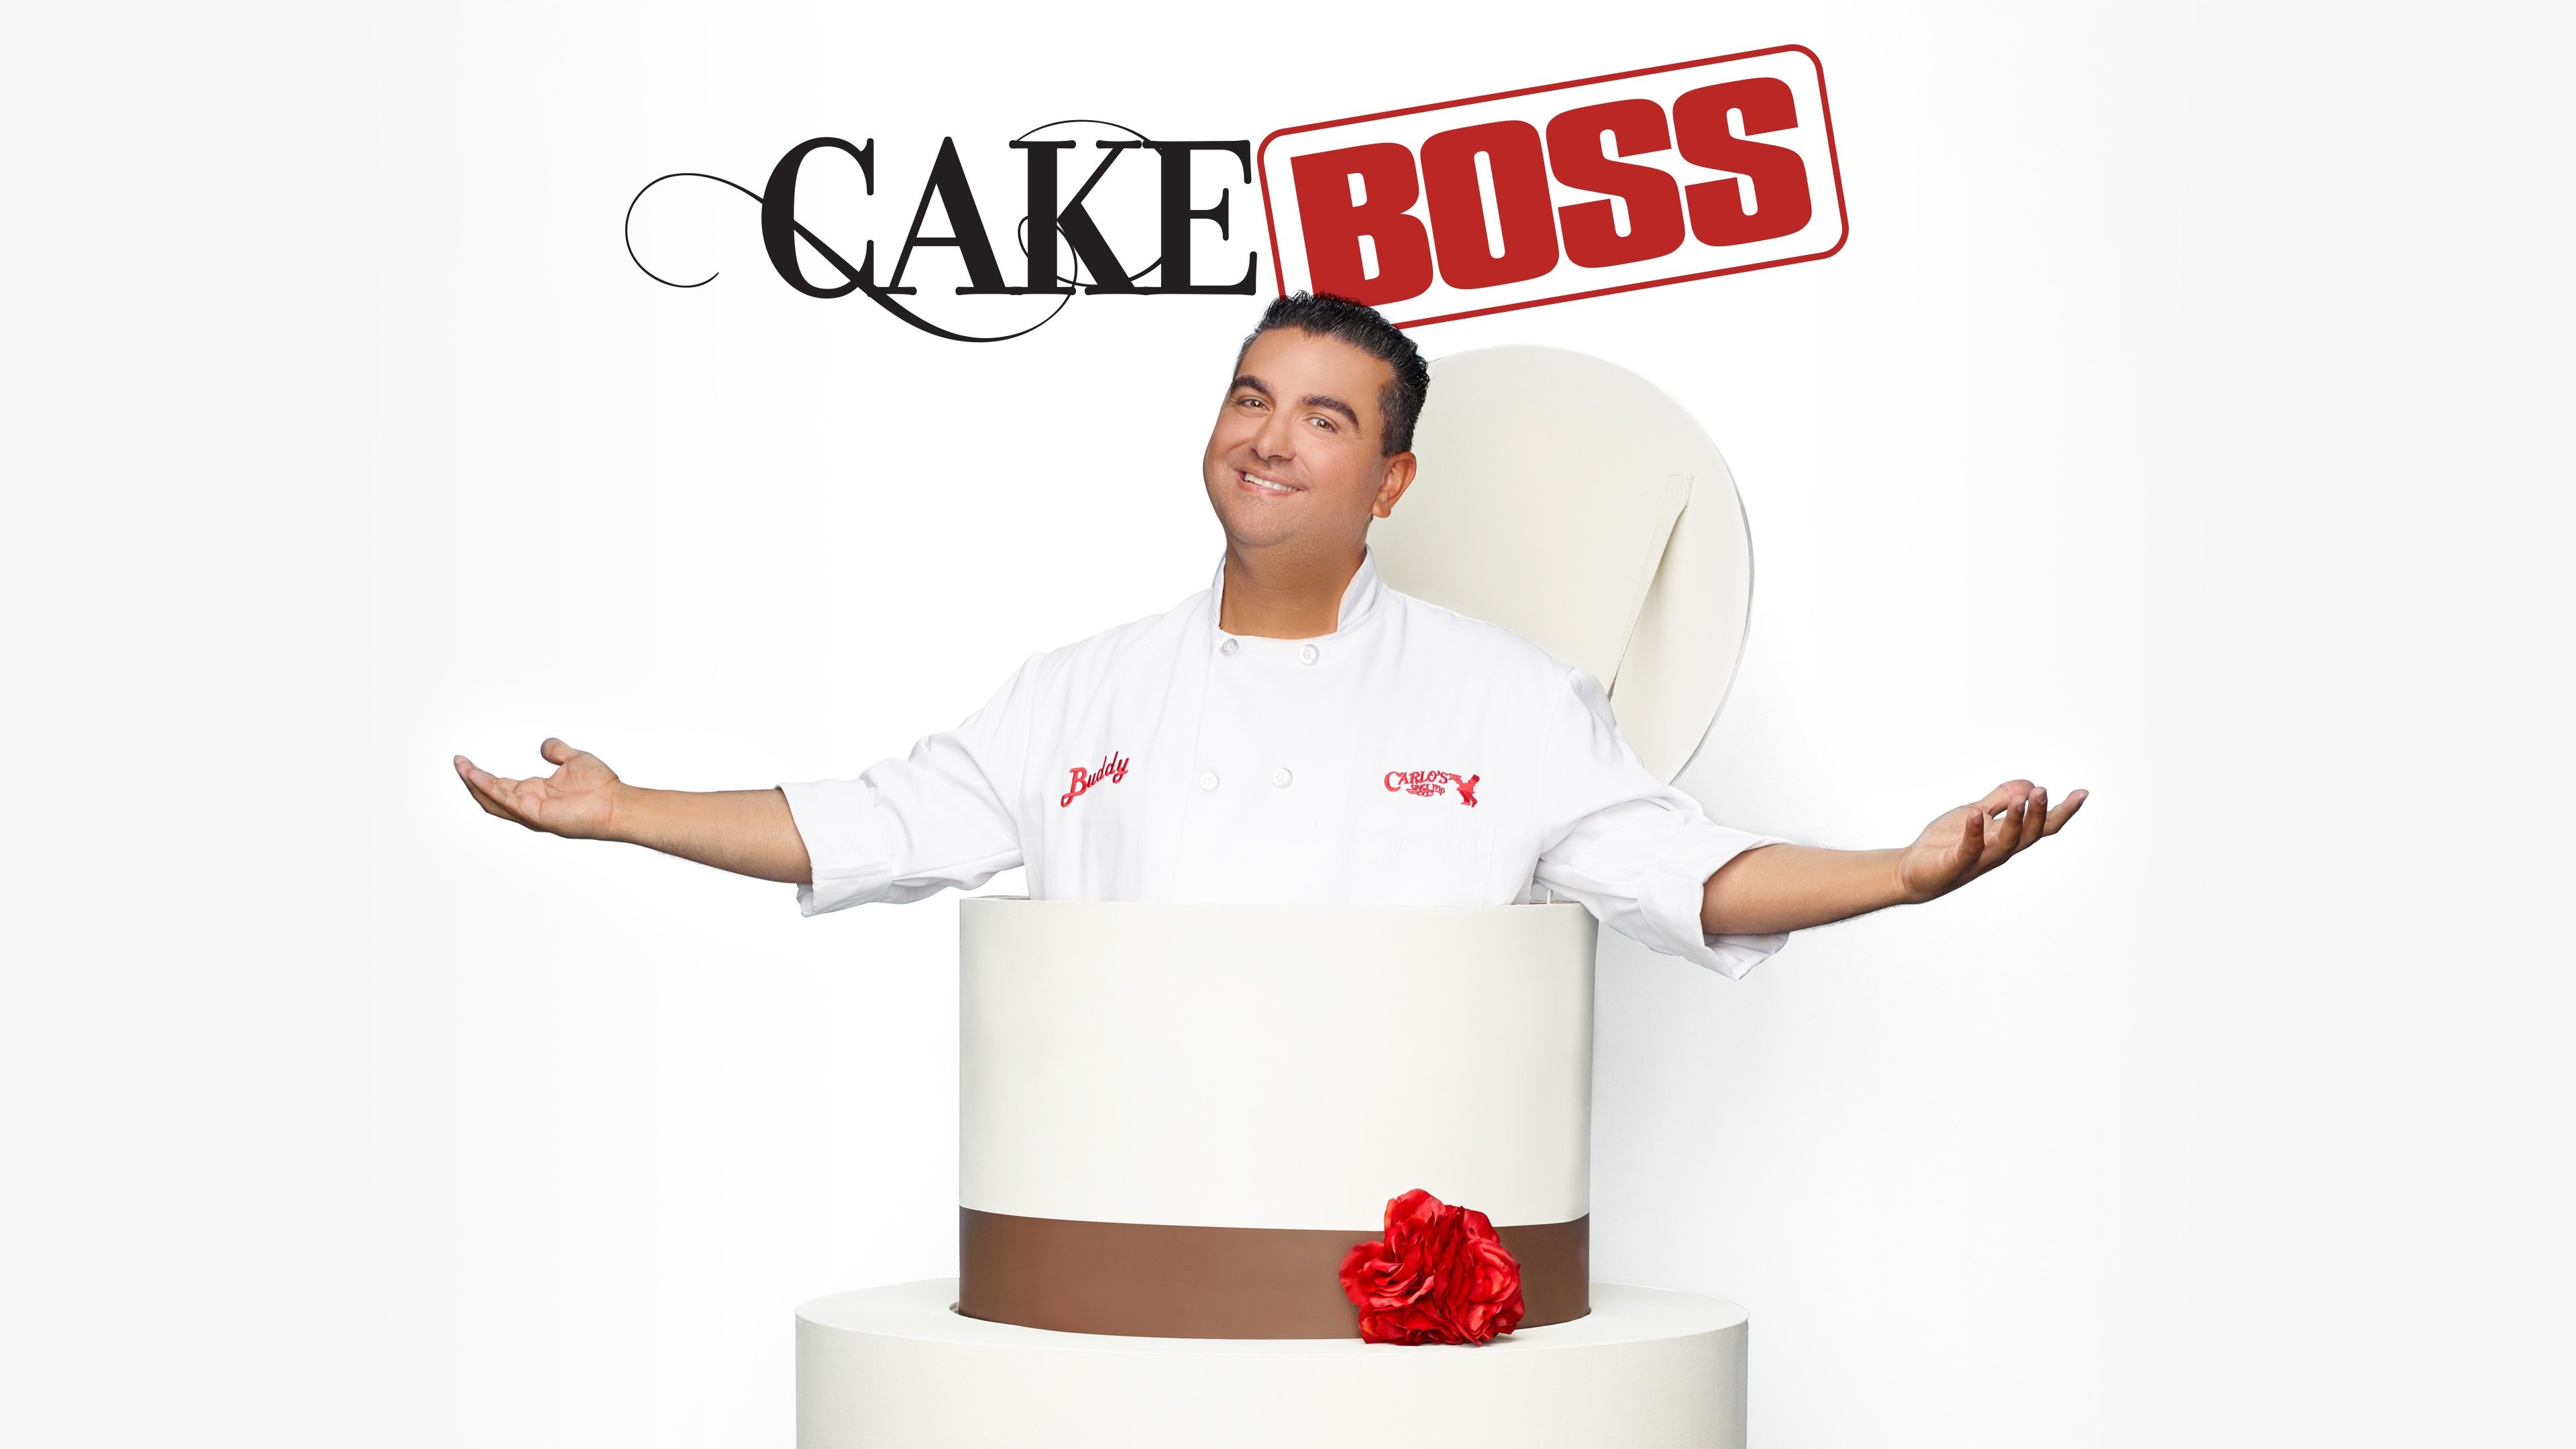 Cake Boss' Buddy Valastro launches Carlo's Bakery line at Walmart |  Supermarket Perimeter